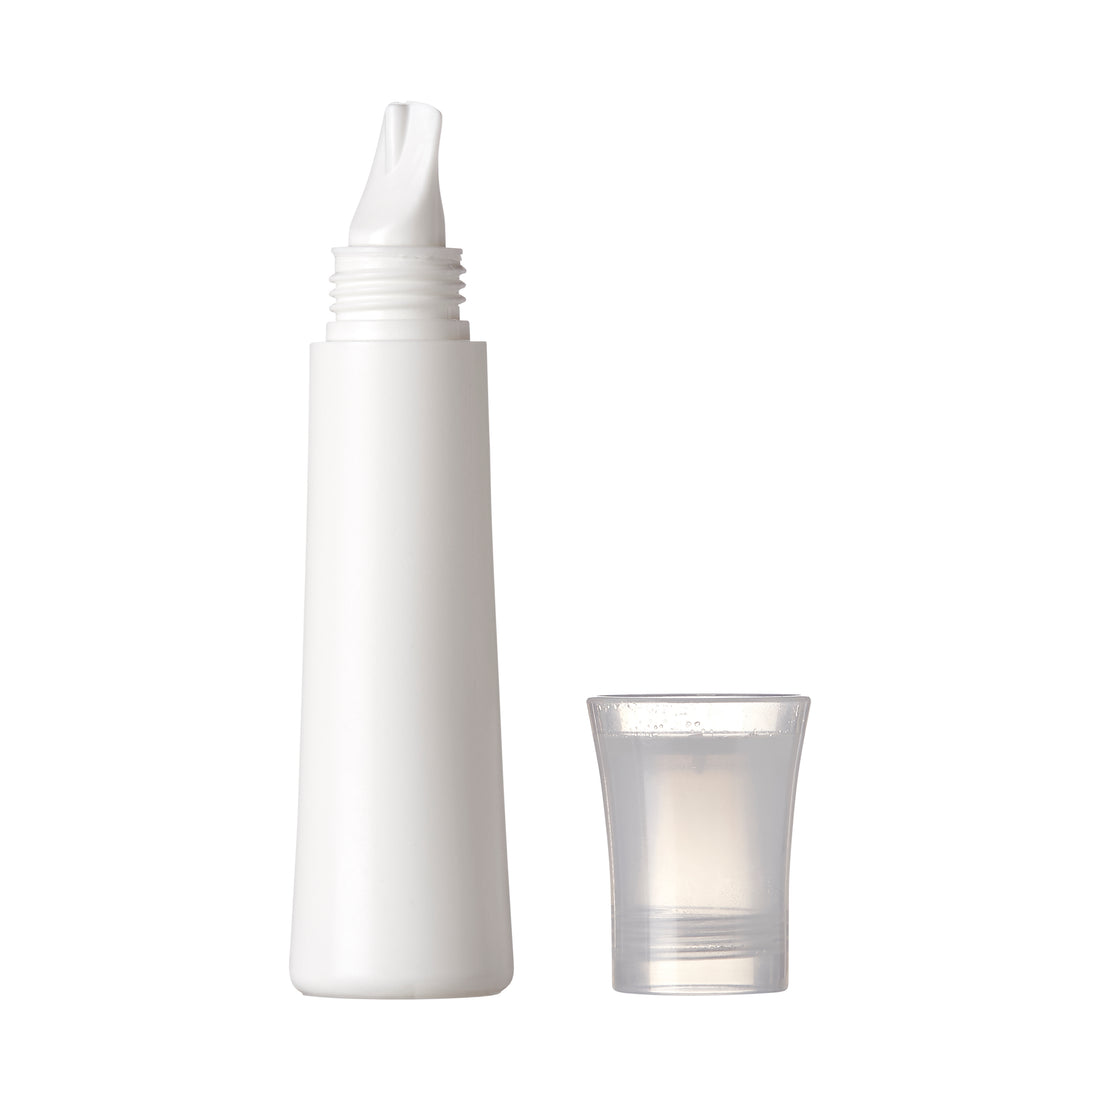 KISS Glue OFF Instant False Nail Remover w. Chisel Tip, 13.5 ml (0.45 fl. oz.)